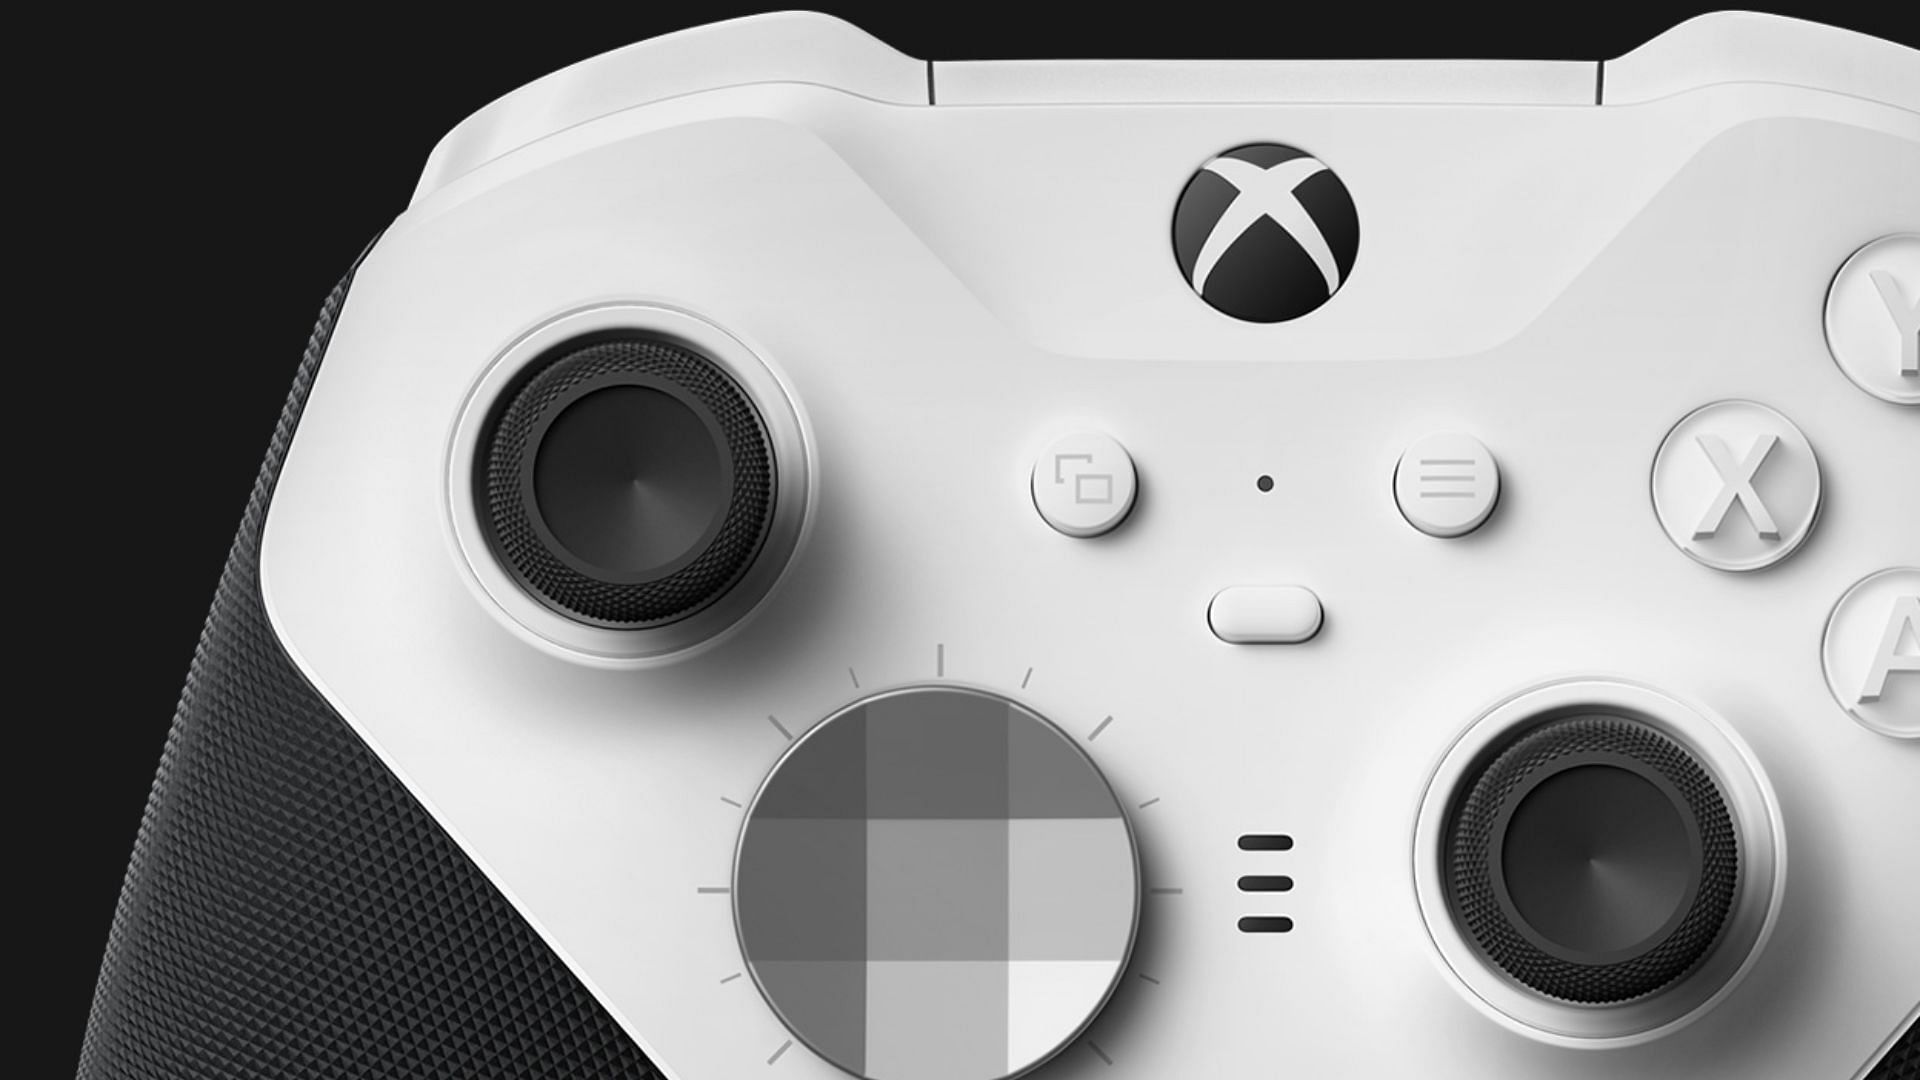 The Xbox Elite Wireless controller (Image via Microsoft)